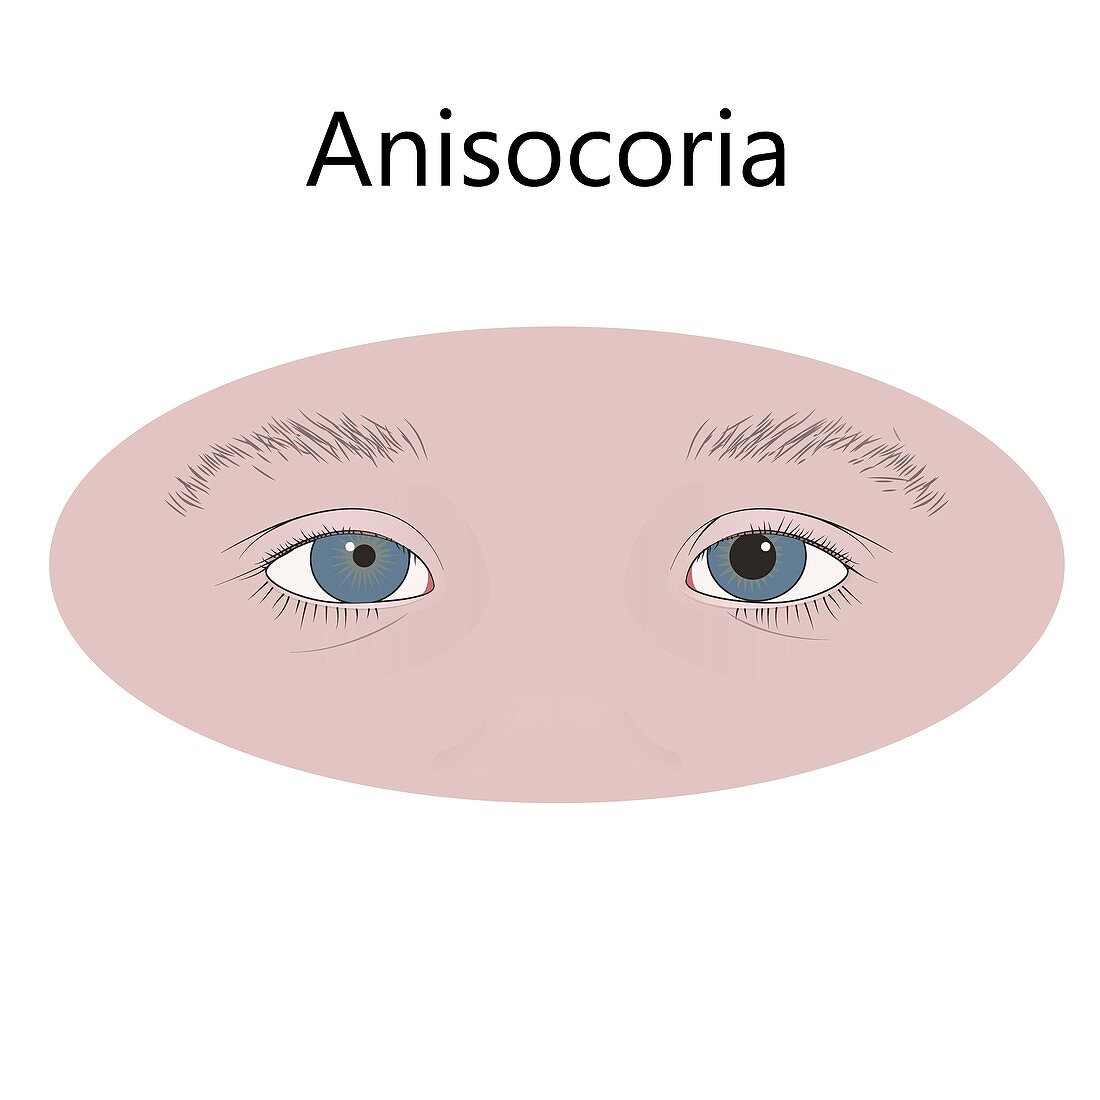 Childhood anisocoria, illustration